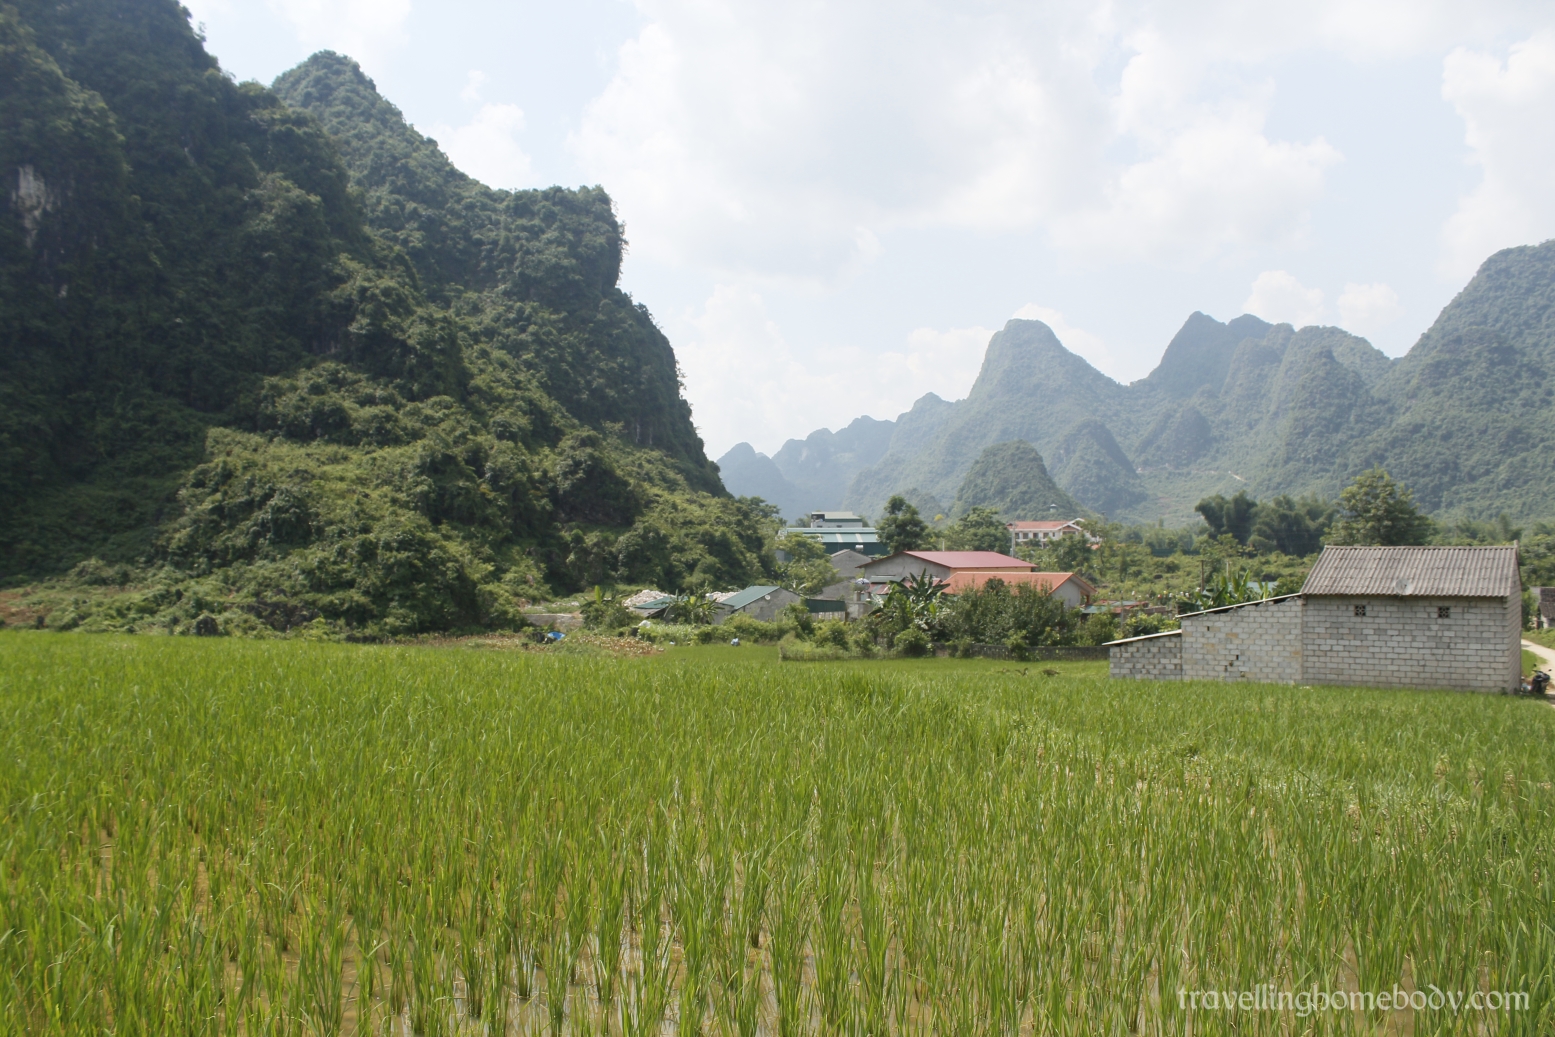 Travelling Homebody - Cao Bang - Vietnam - Photo Essay